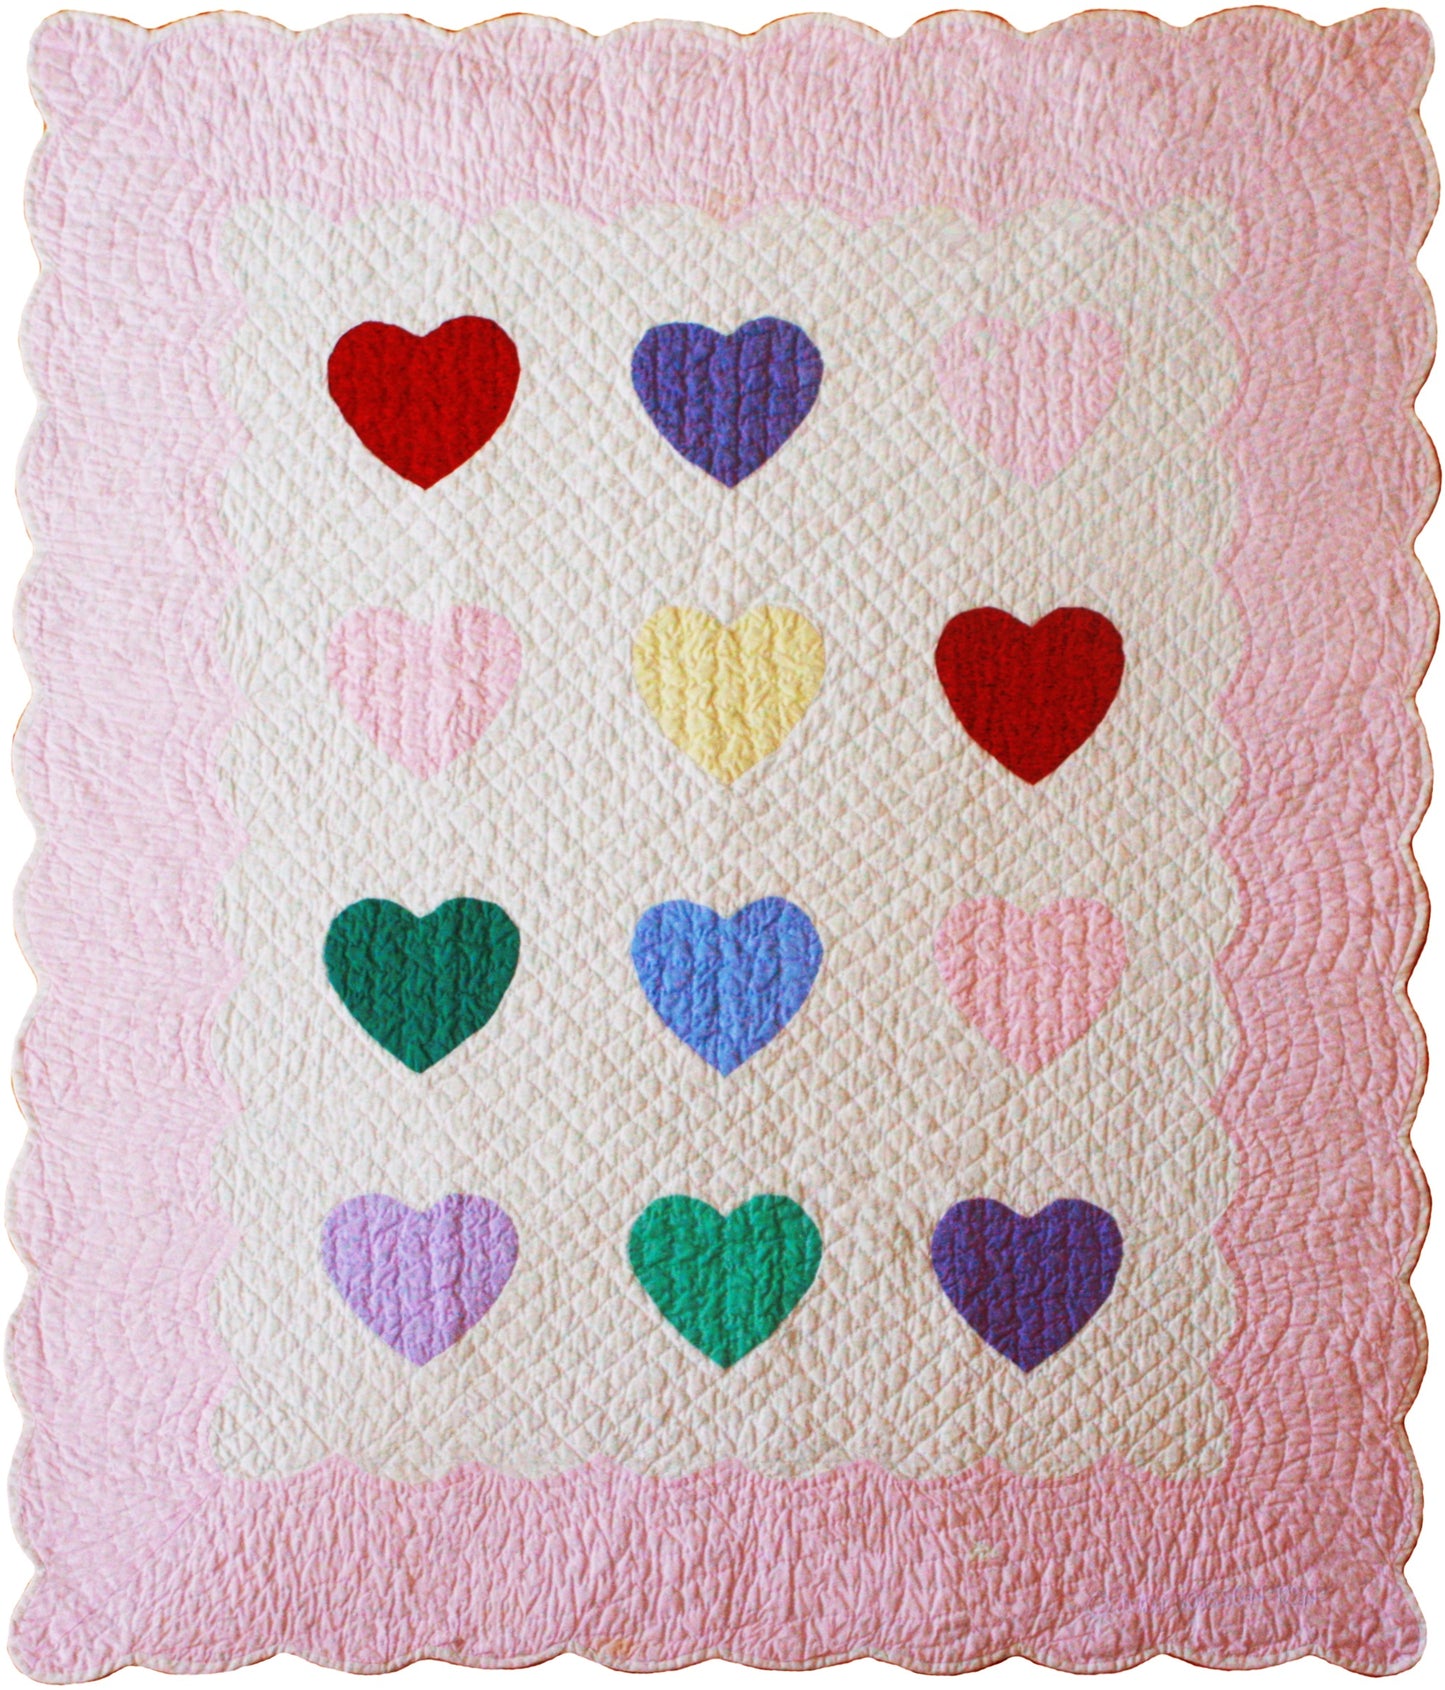 "Multi Heart" in White-Pink Crib Quilt 40" x 49"